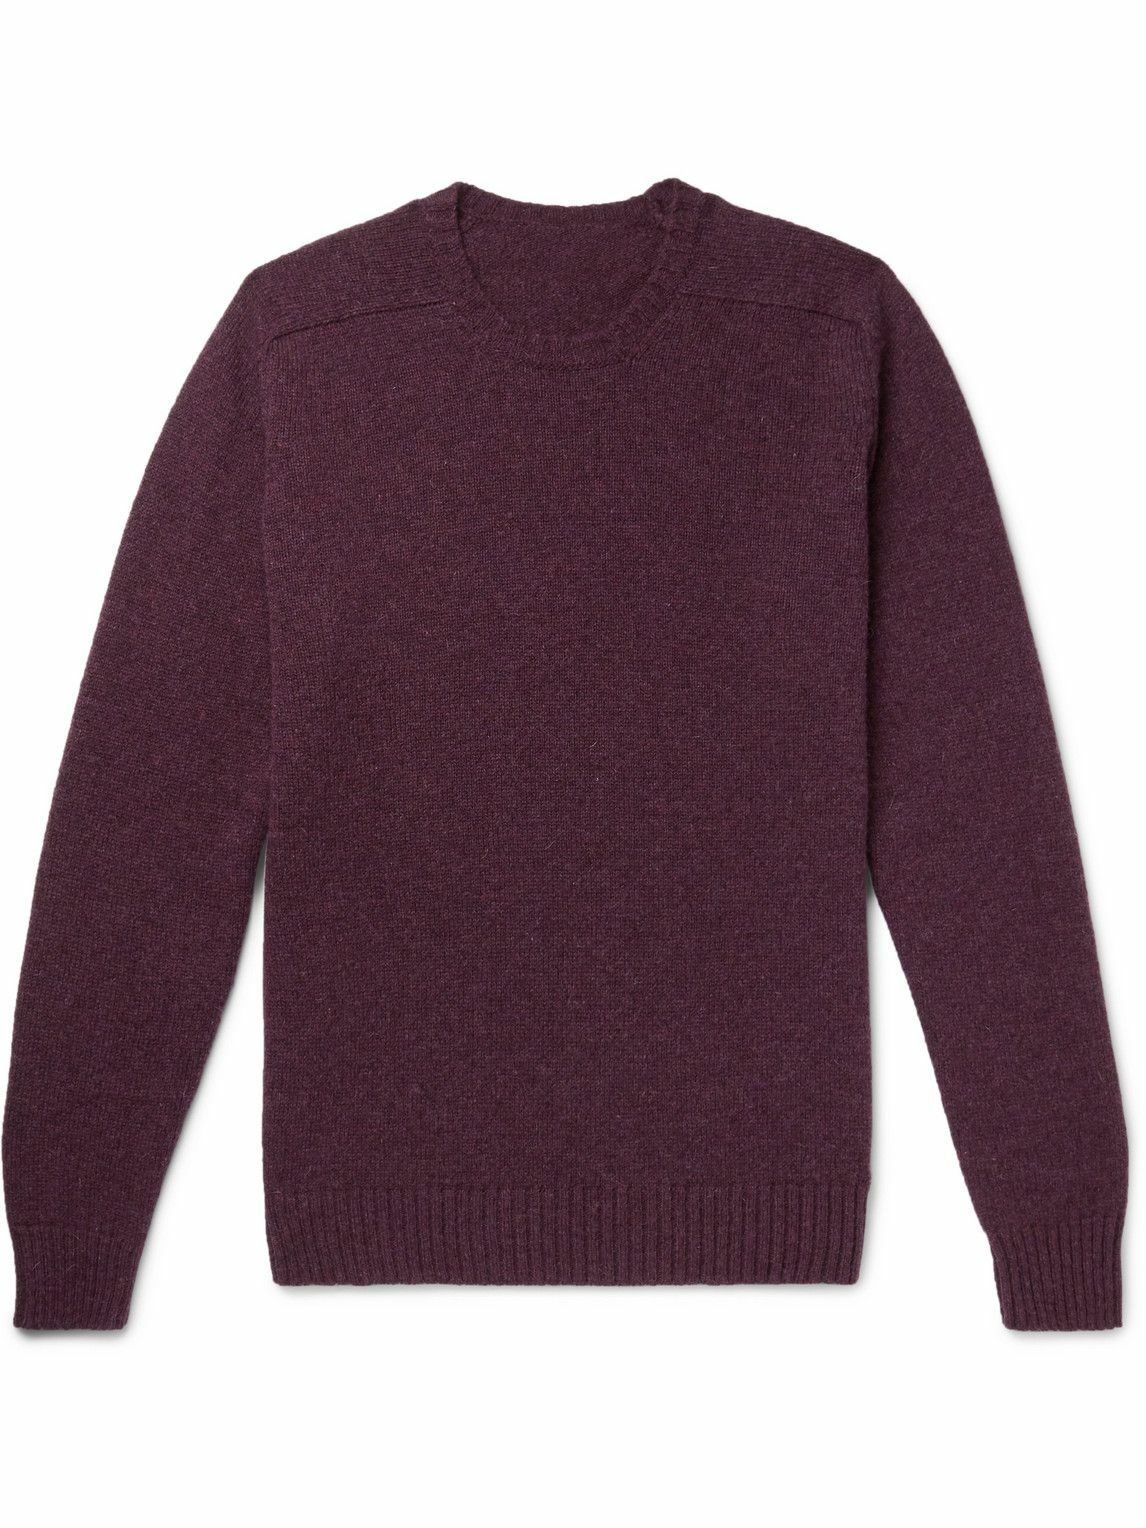 Photo: Anderson & Sheppard - Shetland Wool Sweater - Purple